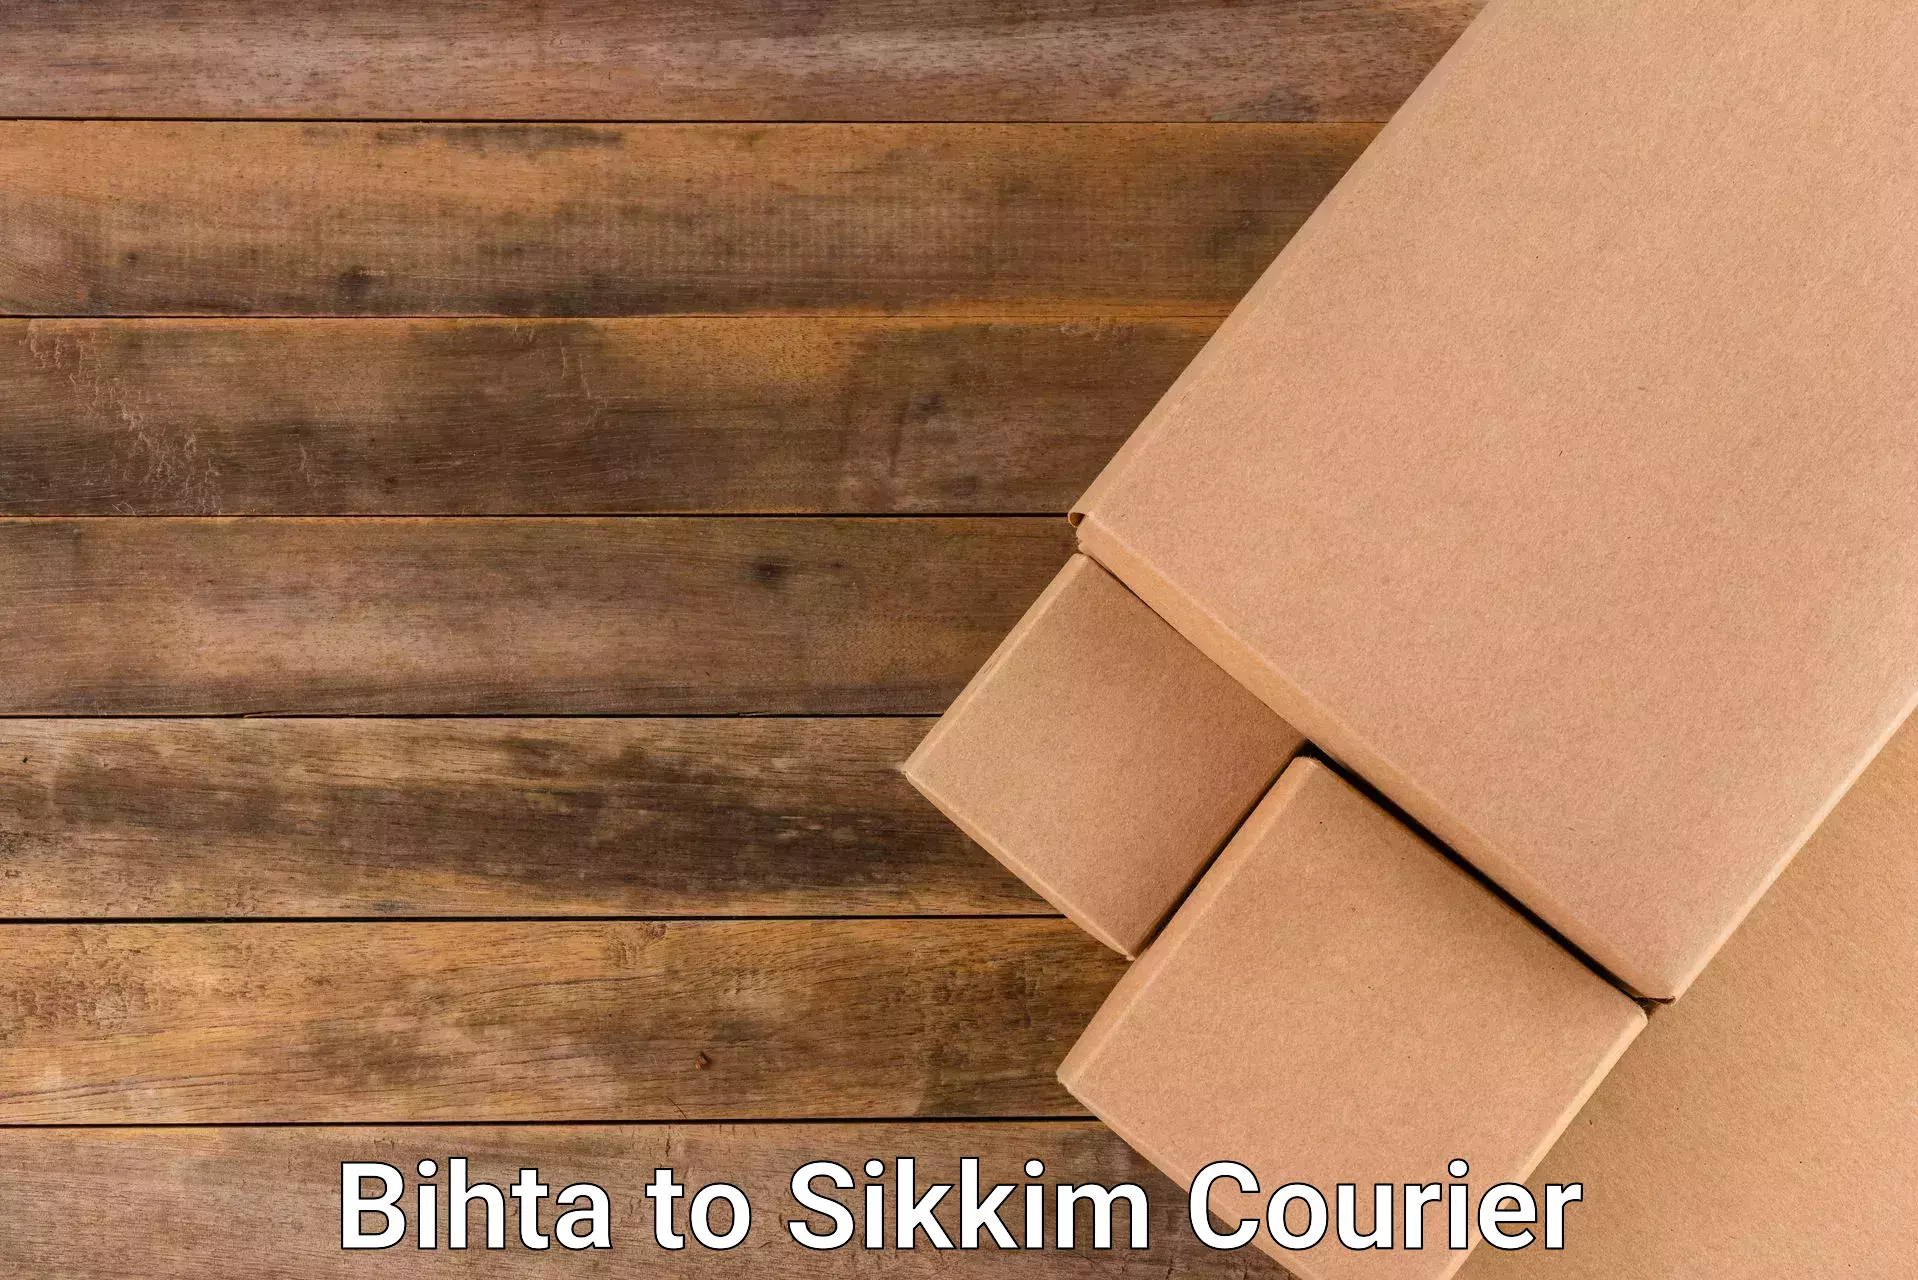 Courier service partnerships Bihta to Mangan